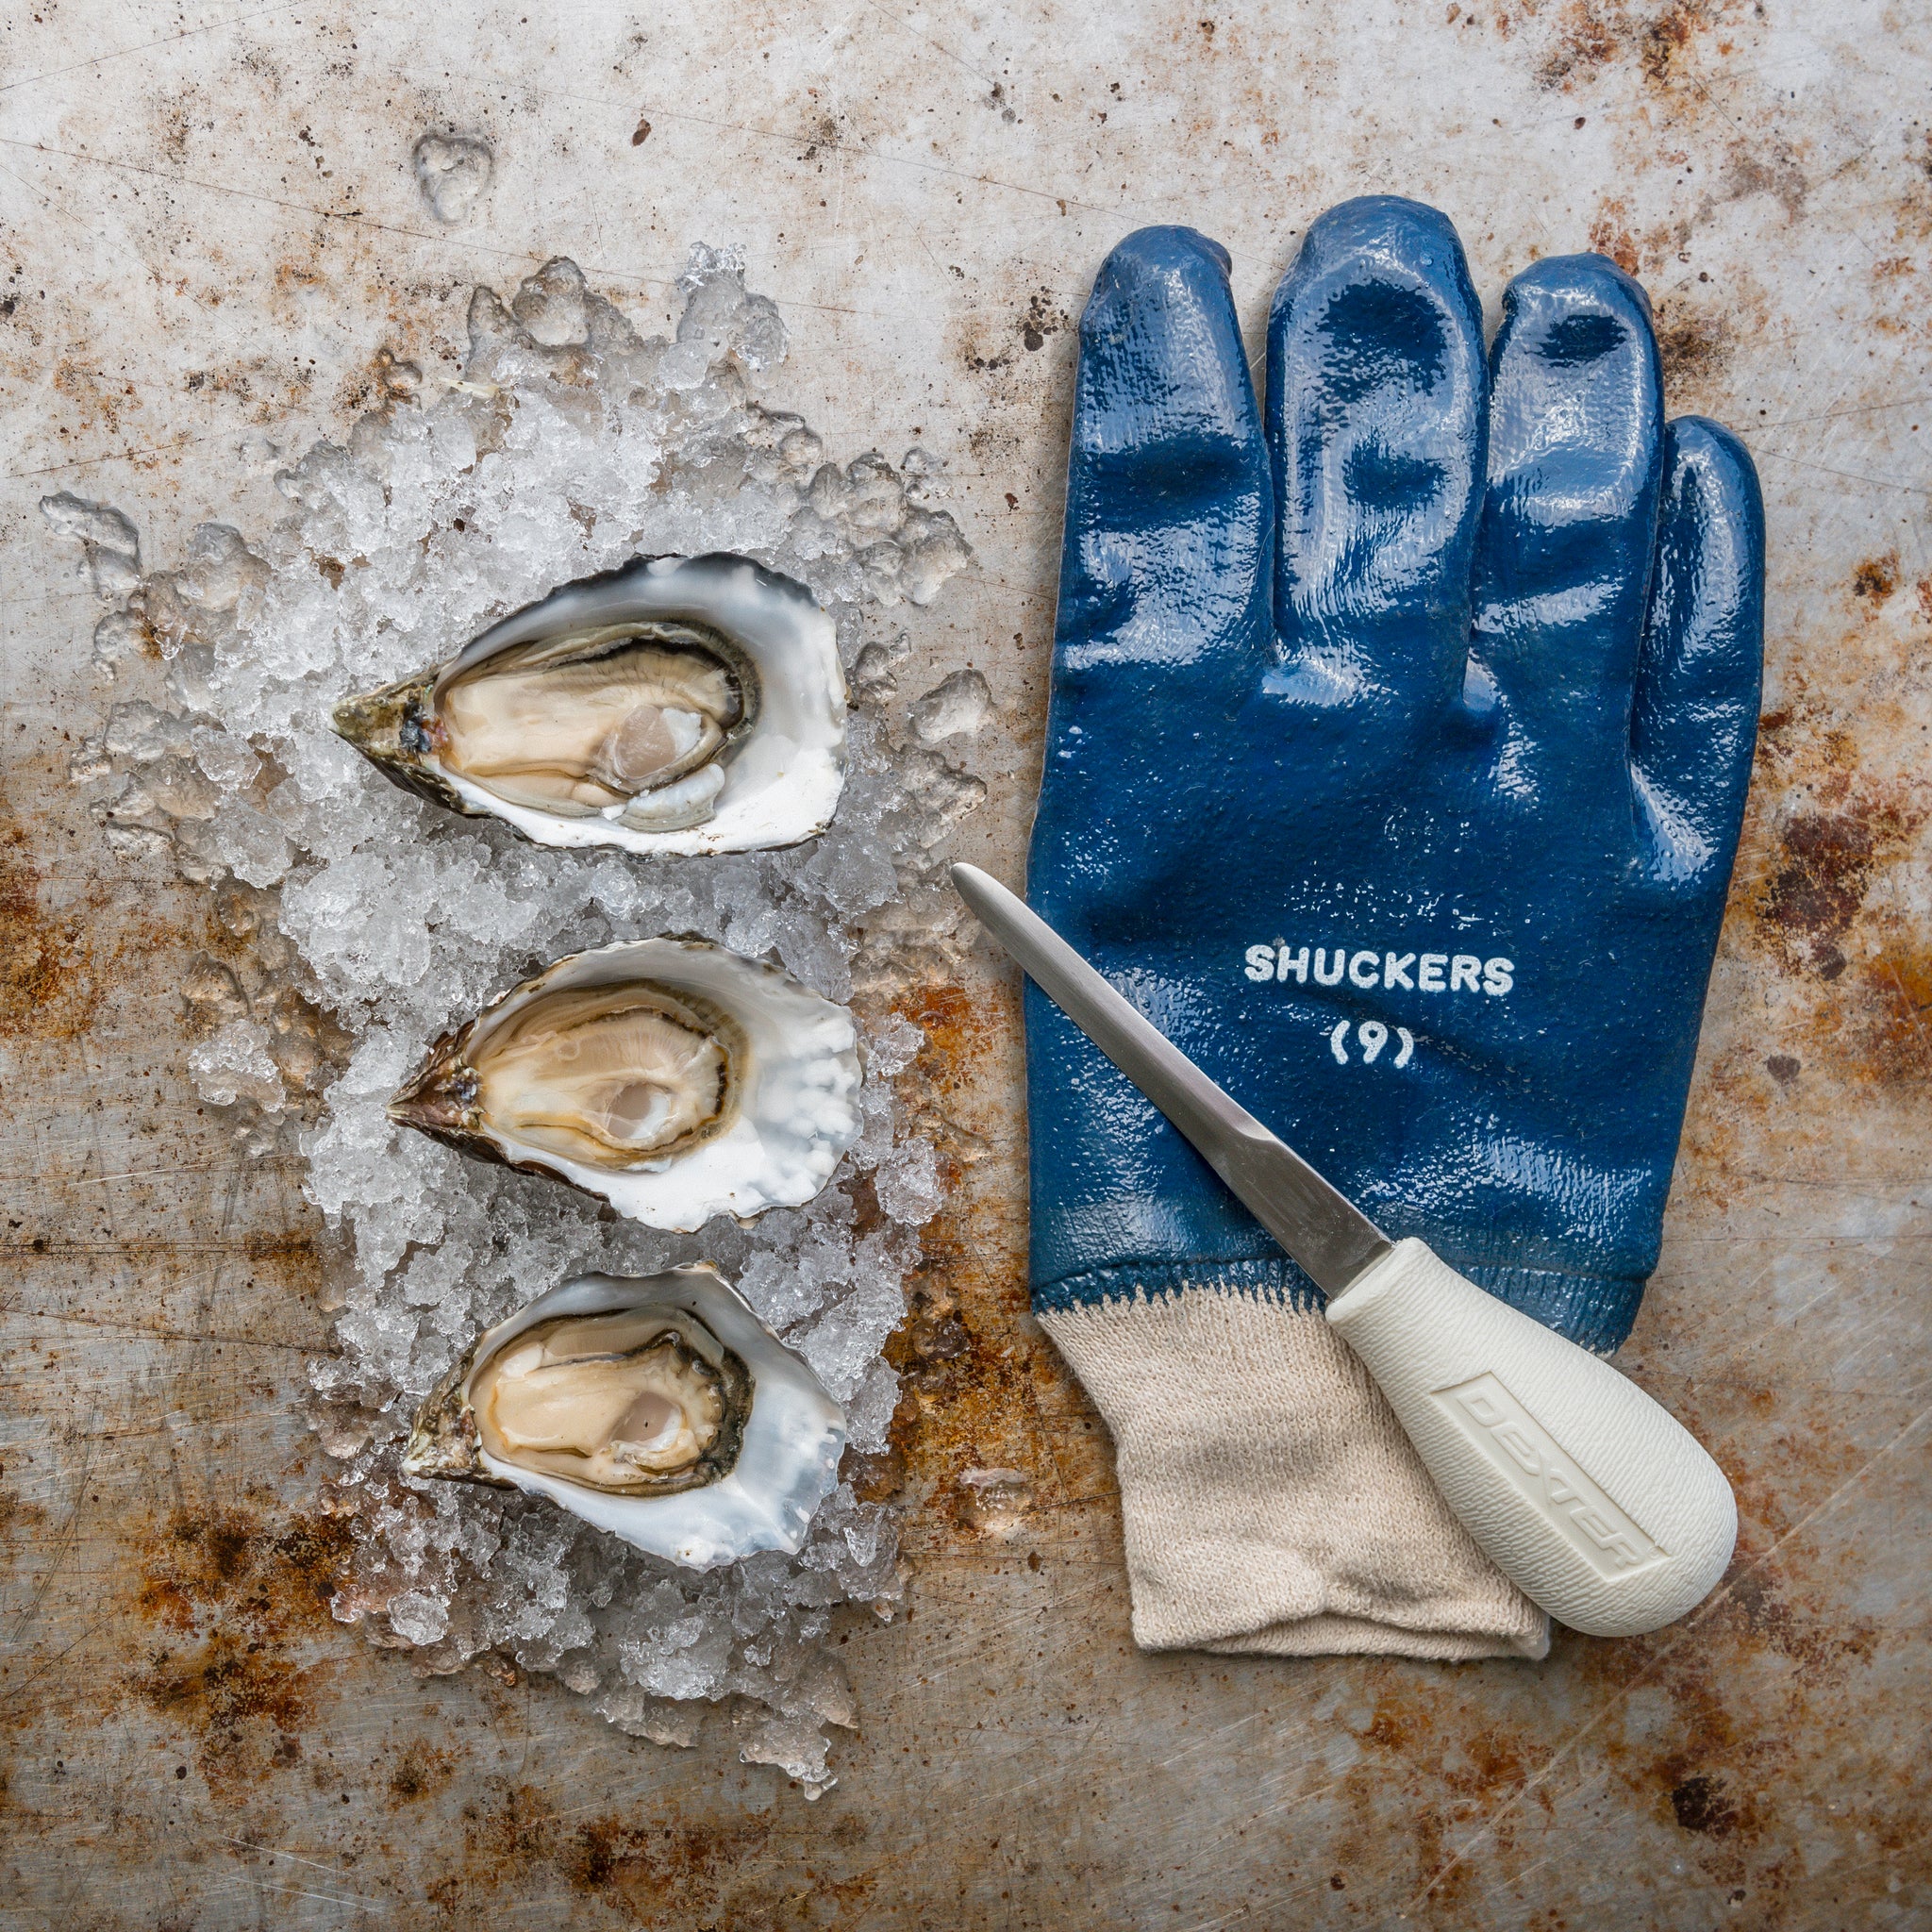 Beginner's Oyster Shucking Kit – Hog Island Oyster Co.